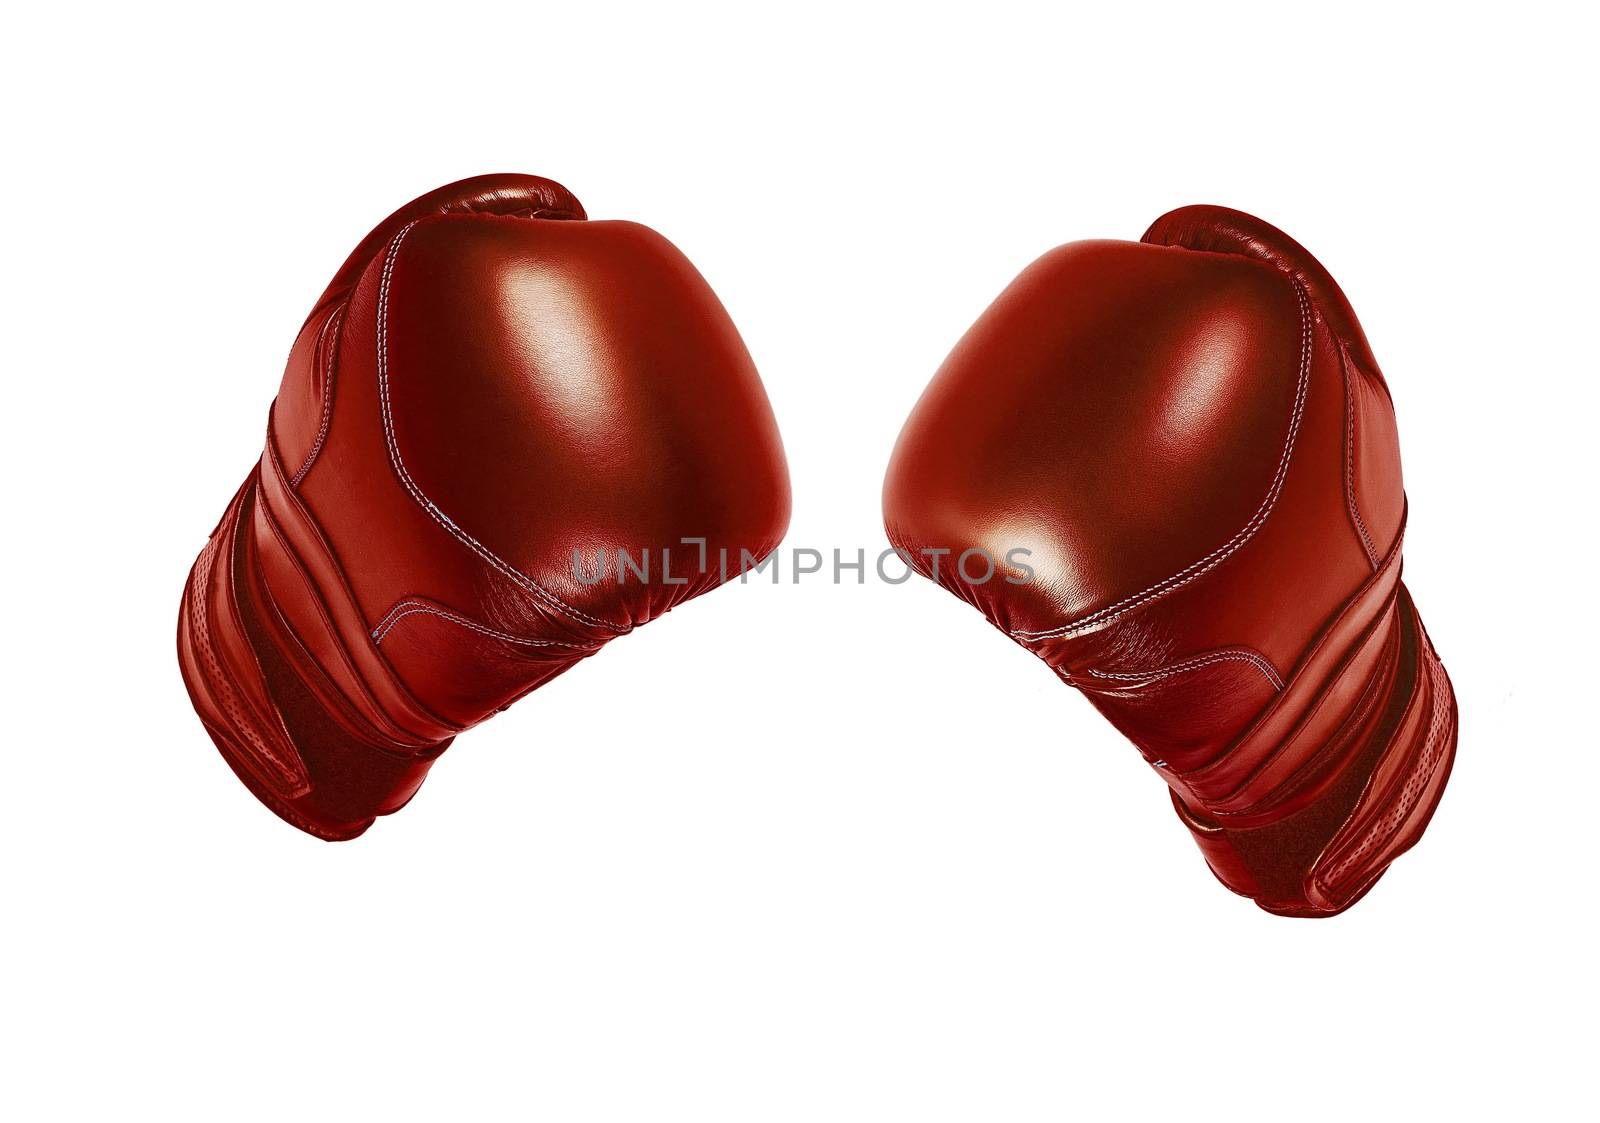 Boxing gloves by Onigiristudio